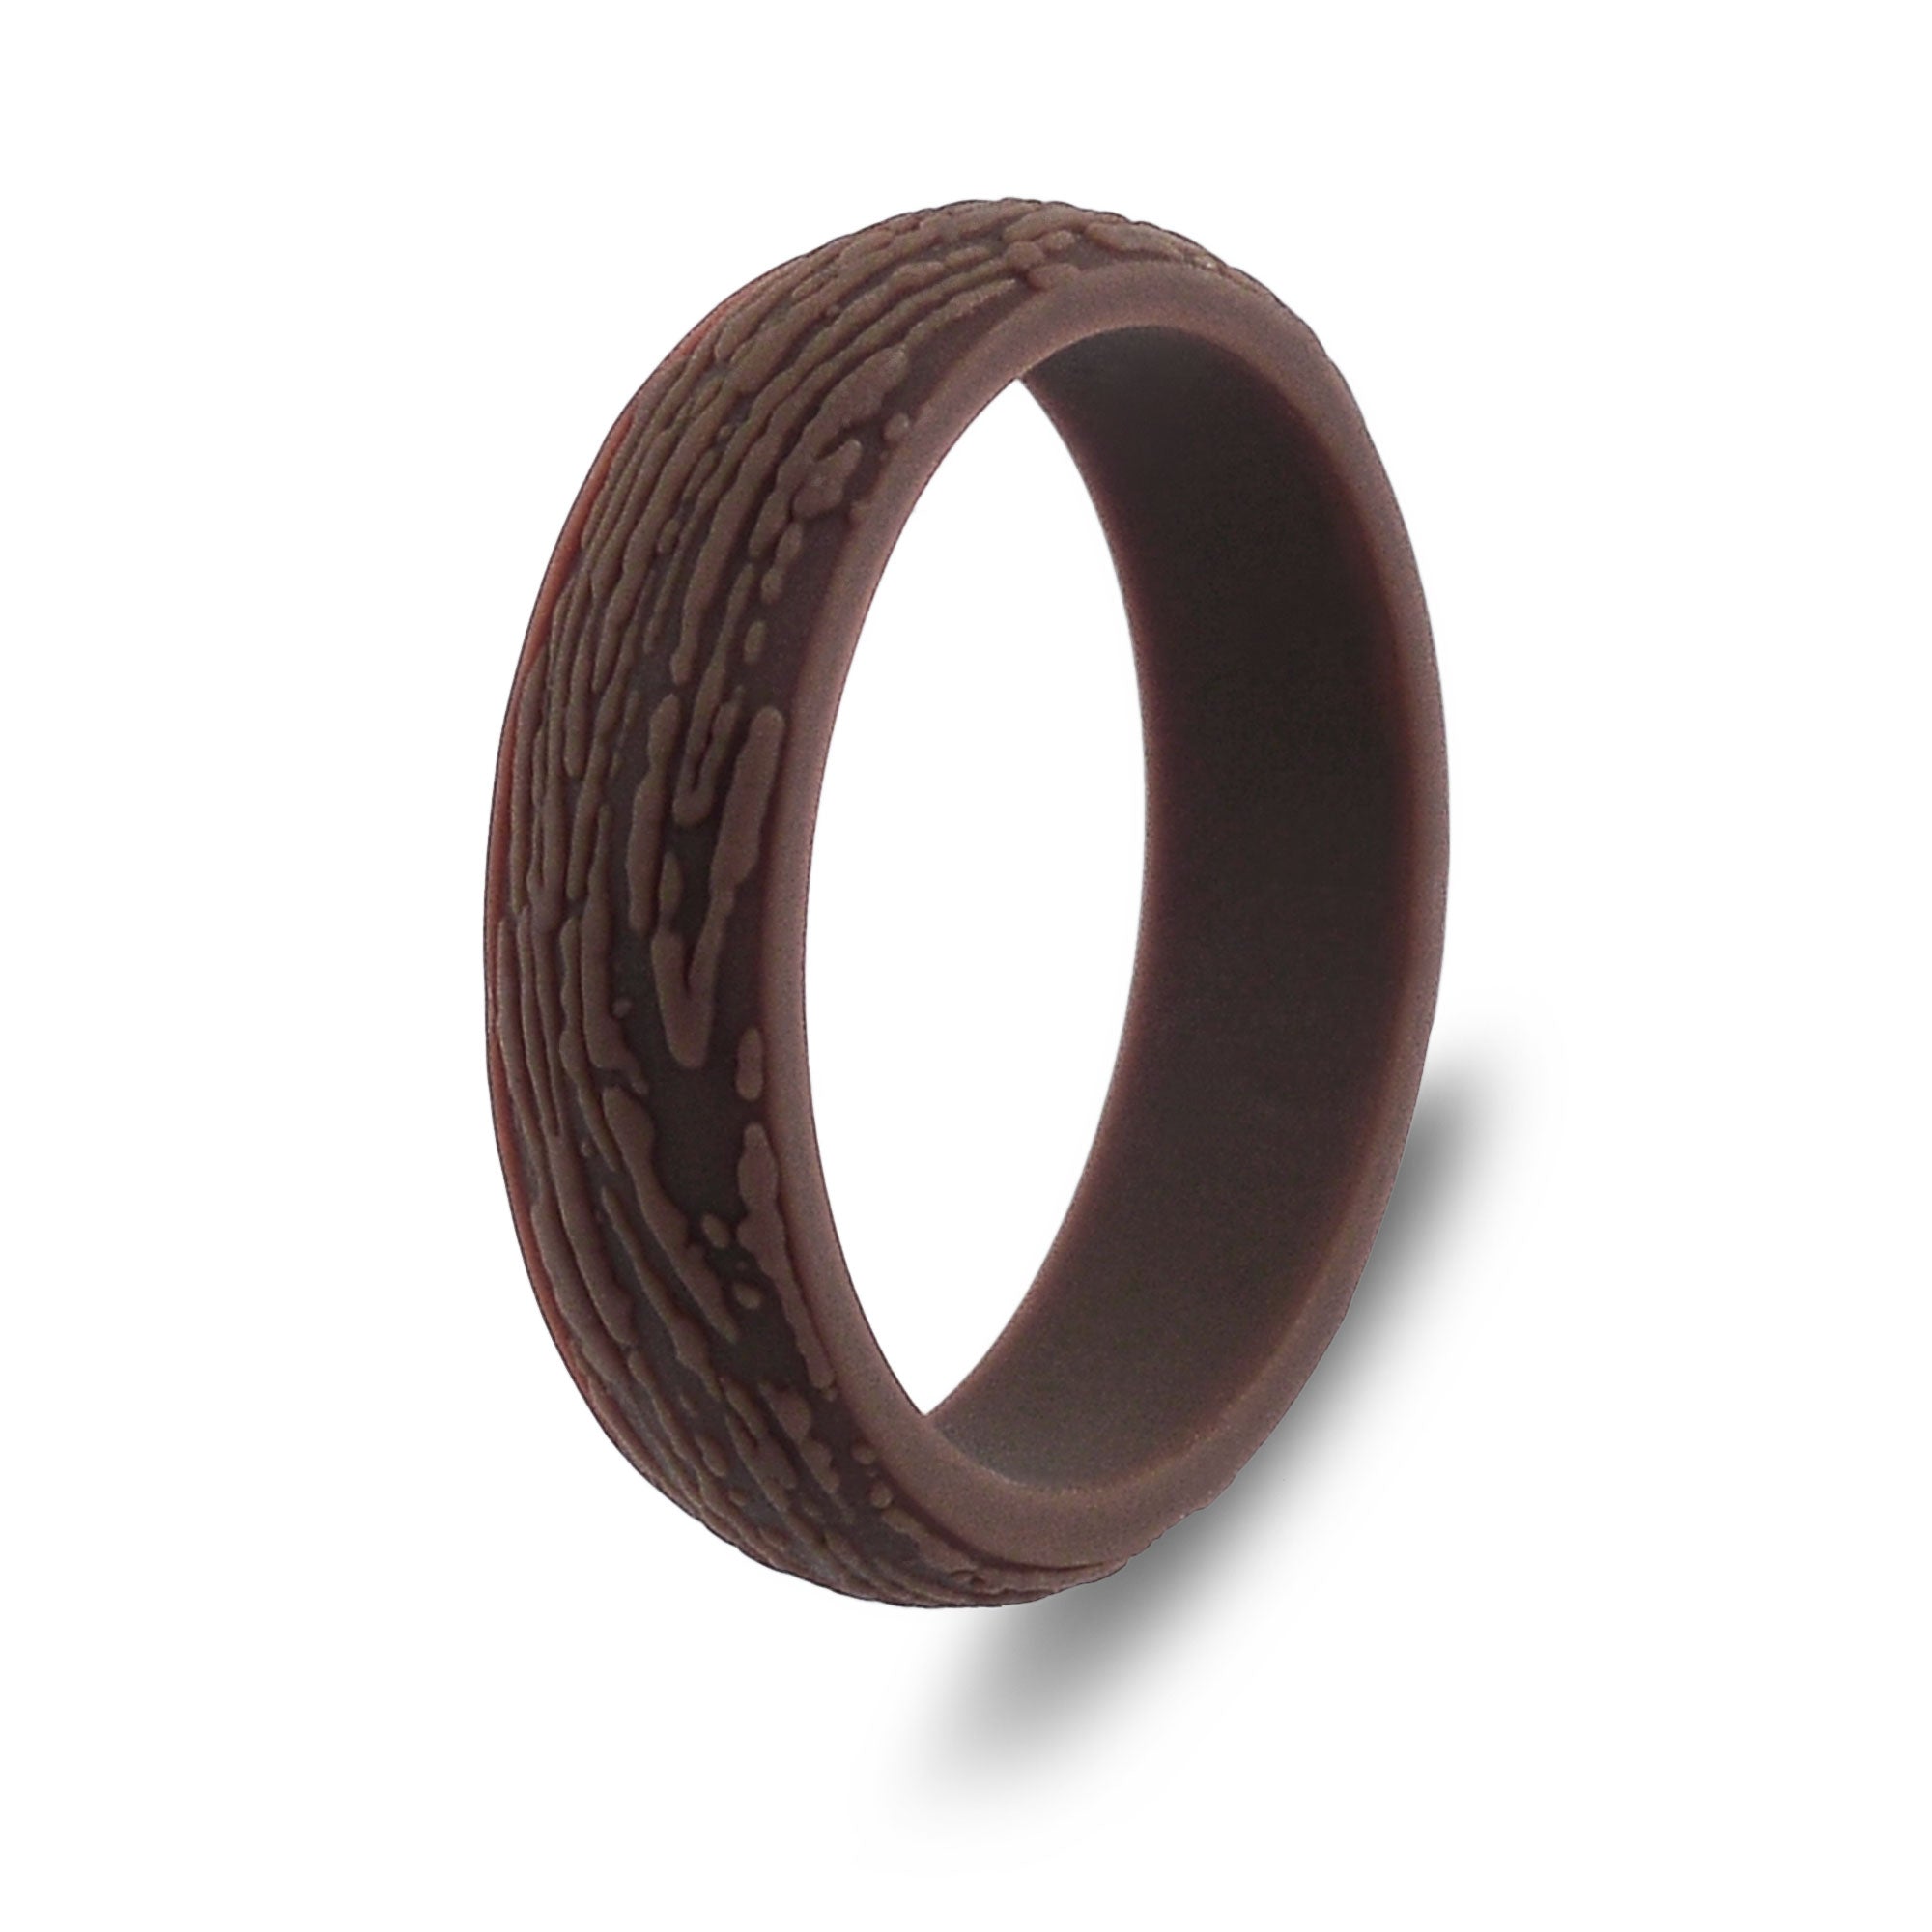 The Cedarwood - Silicone Ring